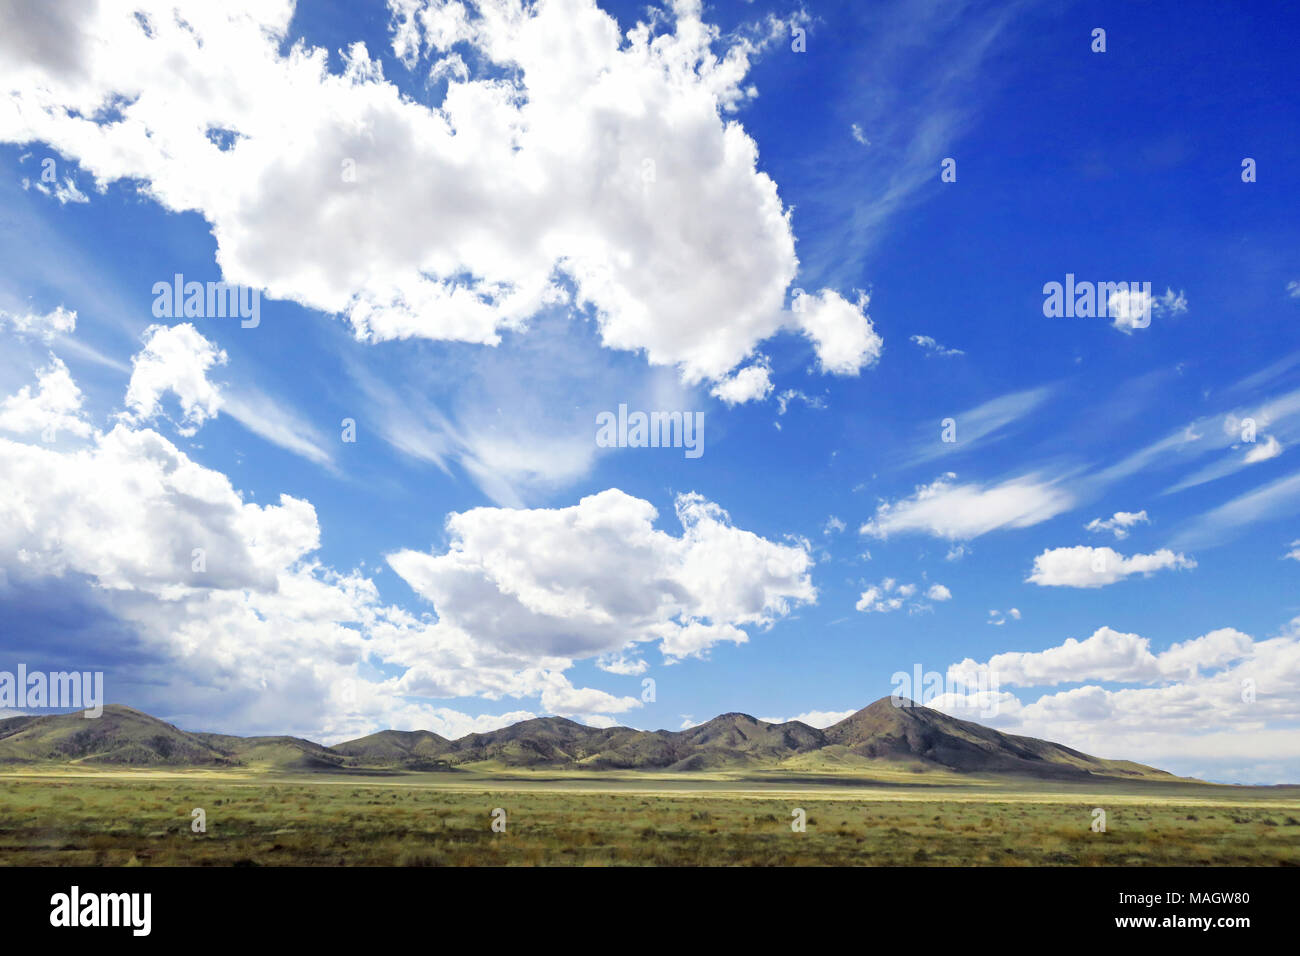 Des pics de montagne avec un superbe ciel bleu rempli de nuages cirrus filandreux. Banque D'Images